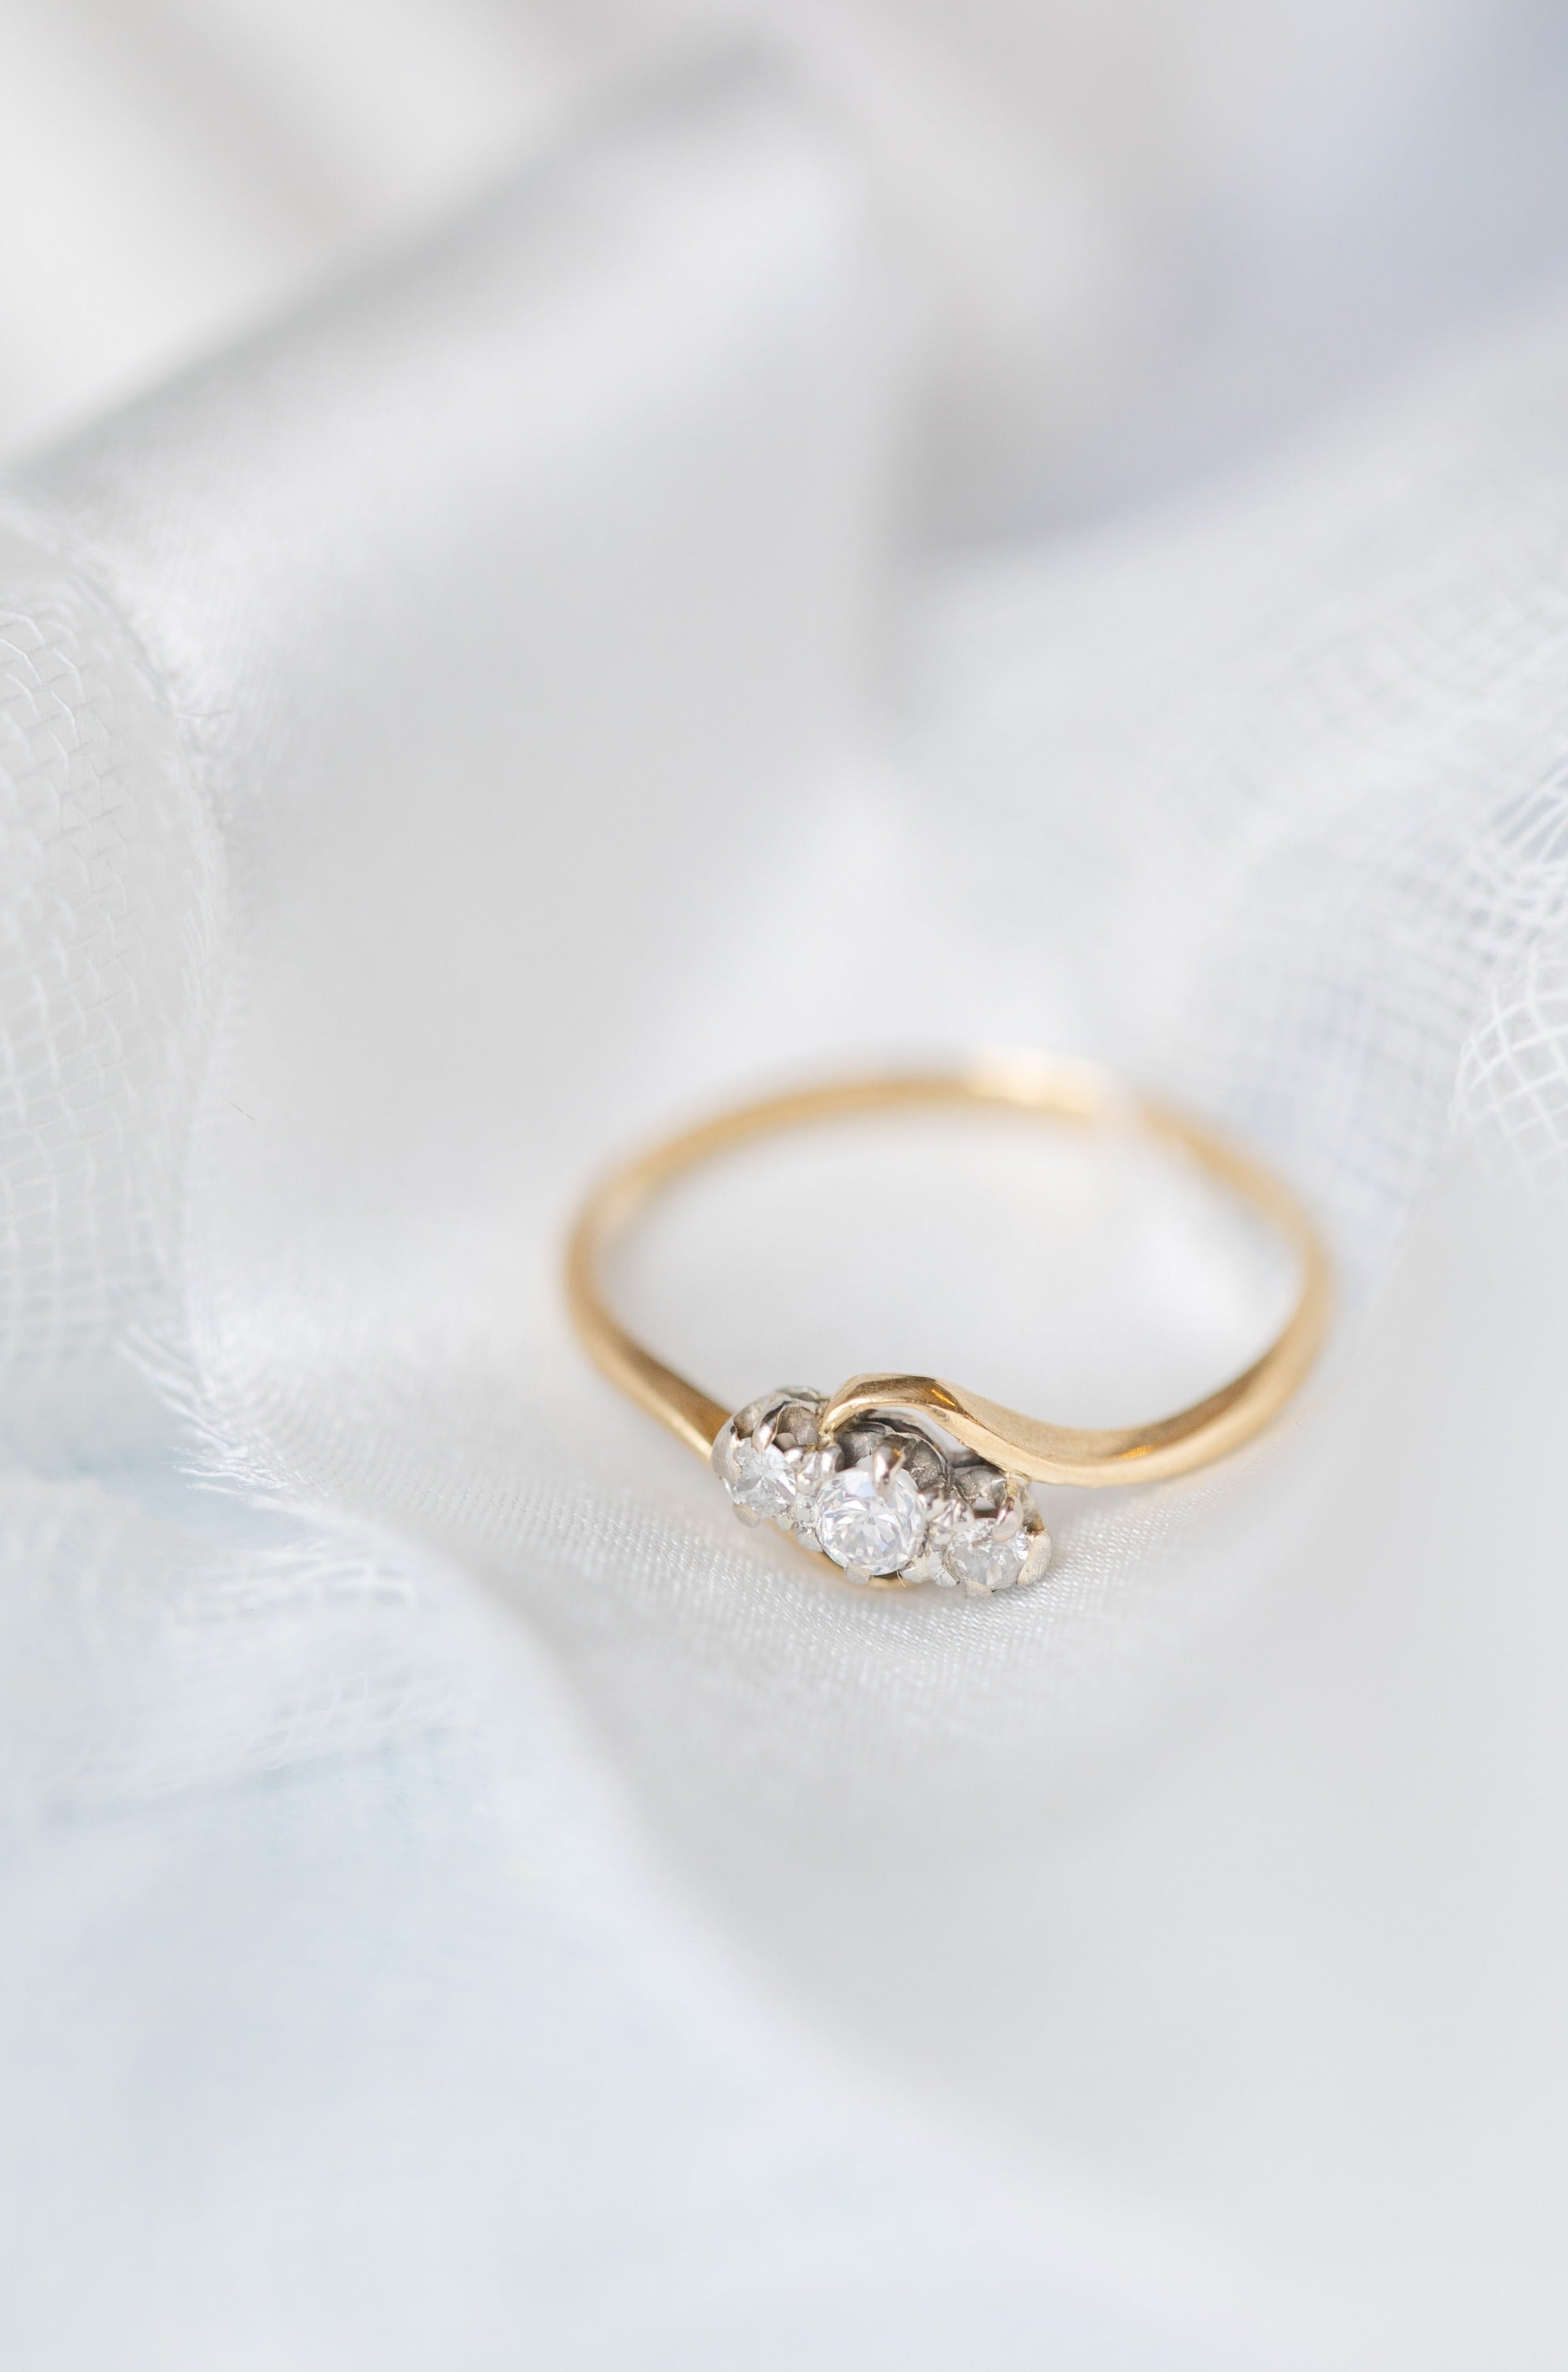 Emilia Trilogy Diamond Engagement Ring in 18ct Gold and Platinum, c.1900 England-1